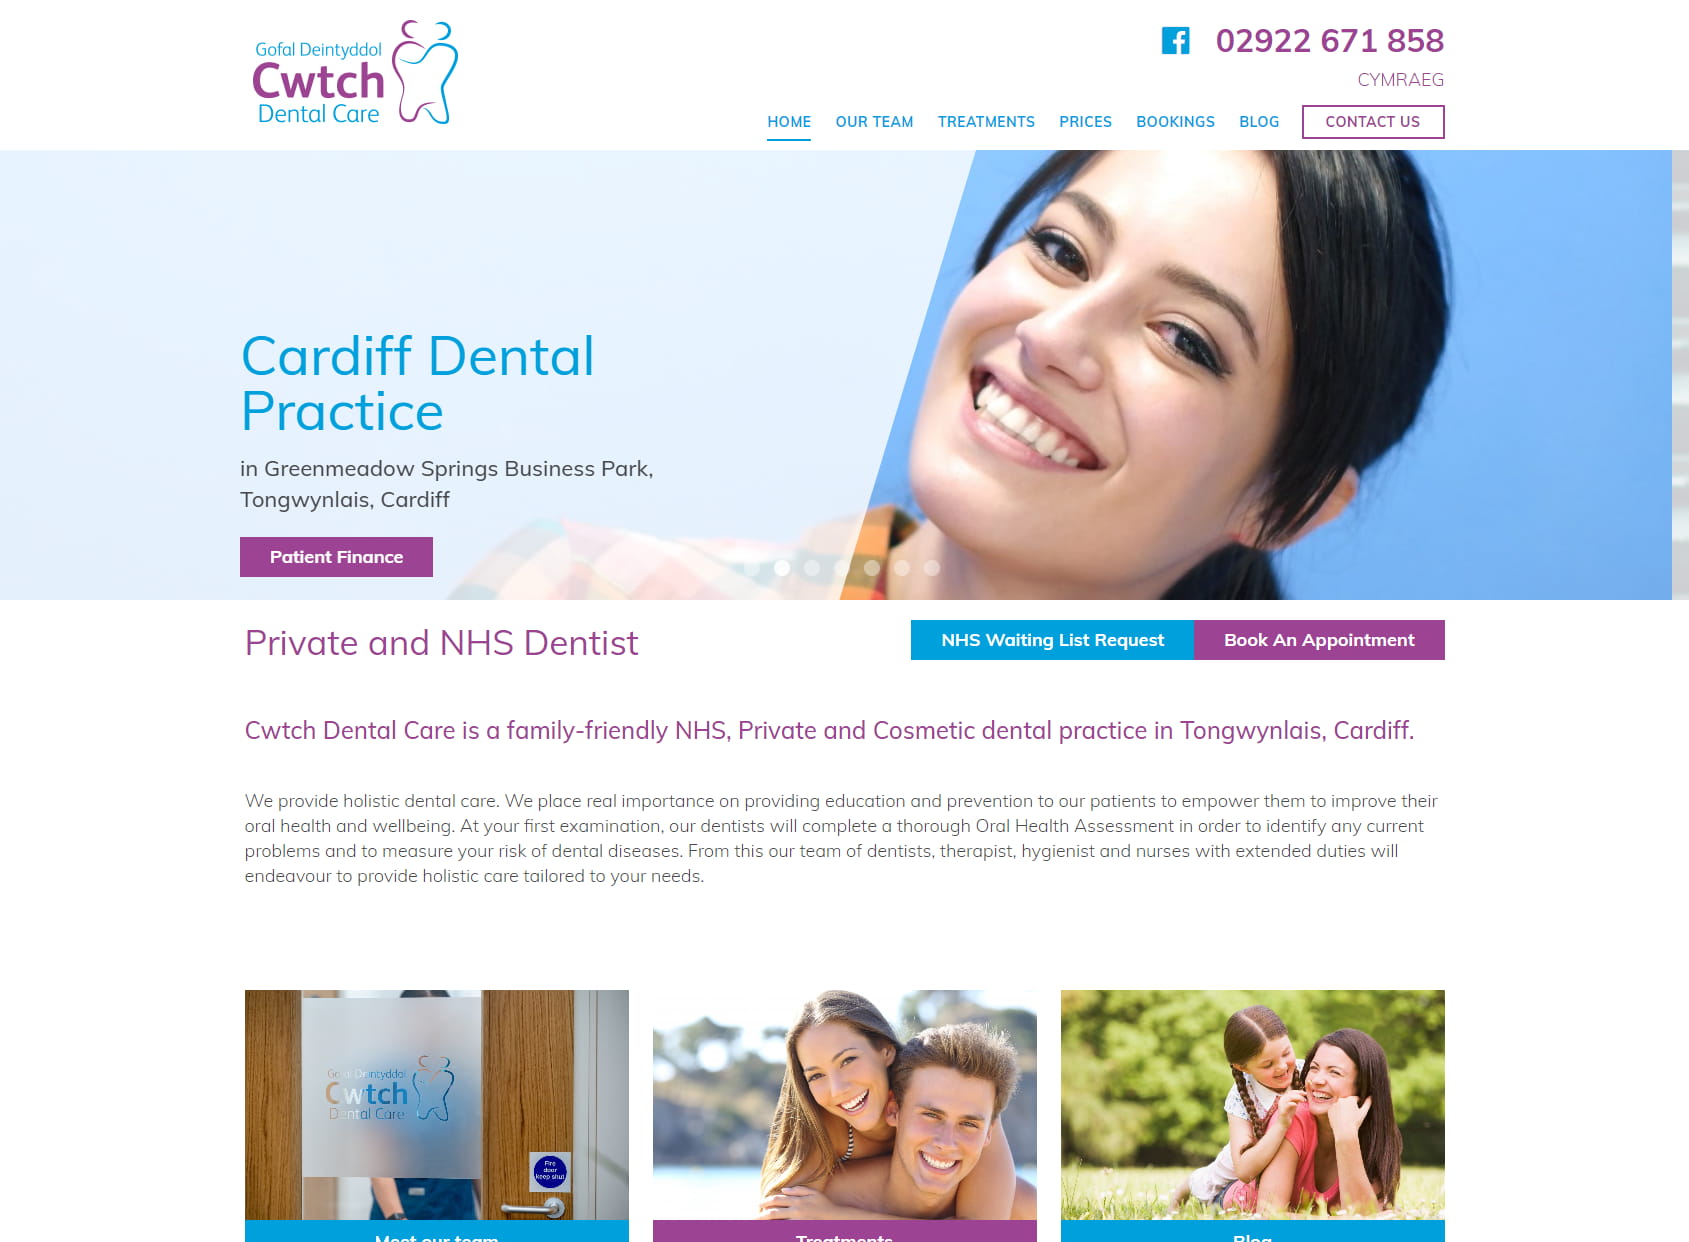 Cwtch Dental Care